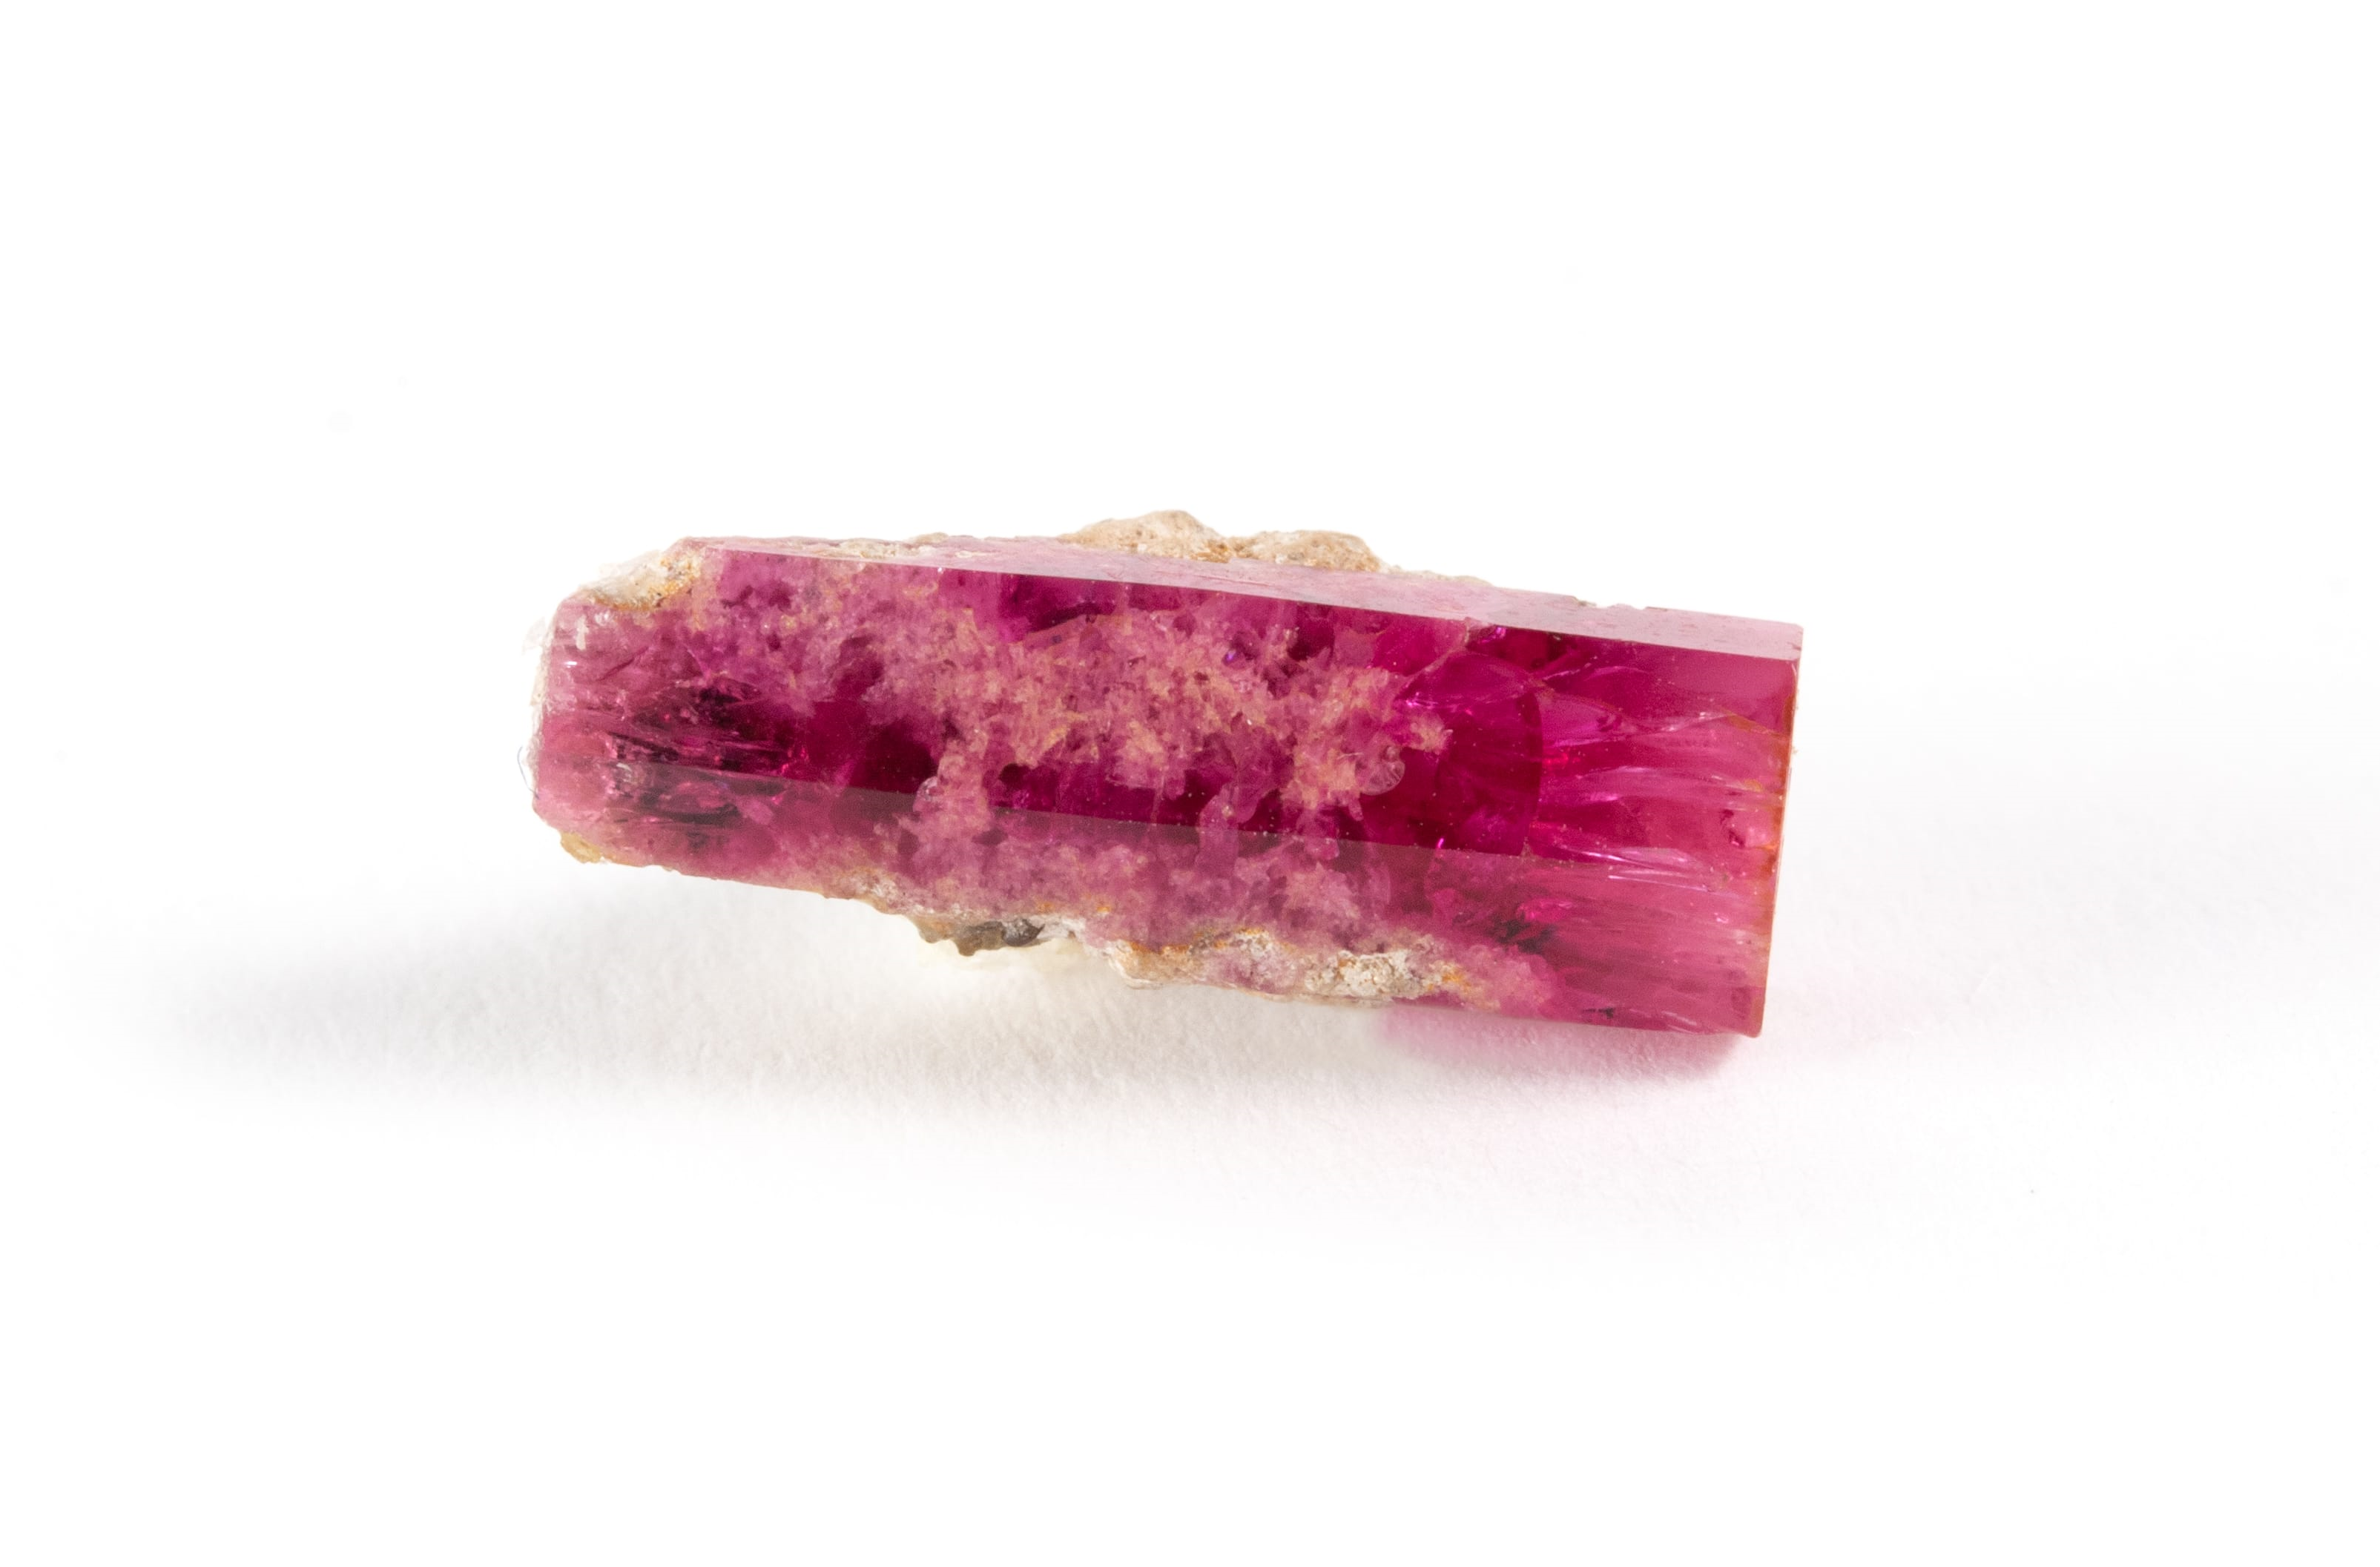 American Gemstones: Red Beryl from Utah - - rough red beryl crystal image credit jtv min crop